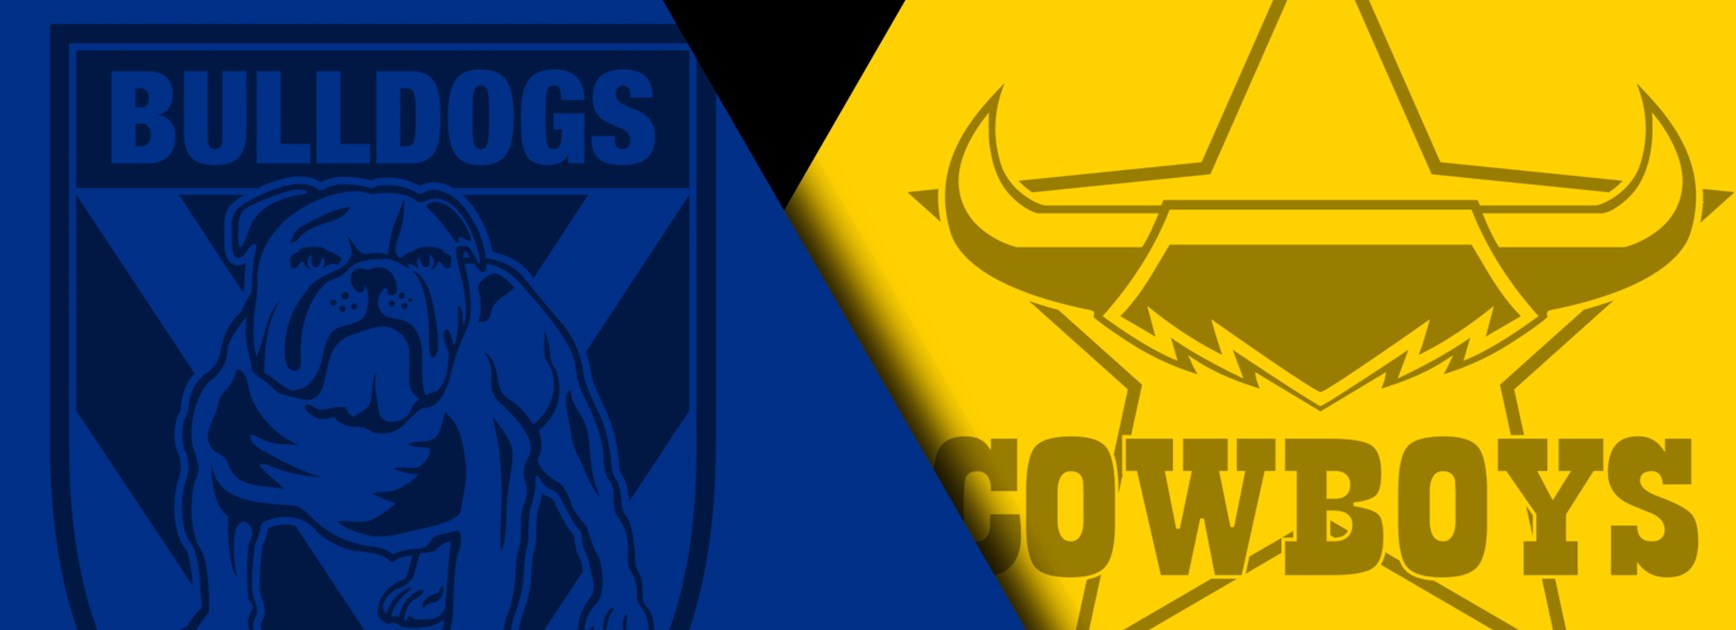 Bulldogs v Cowboys preview